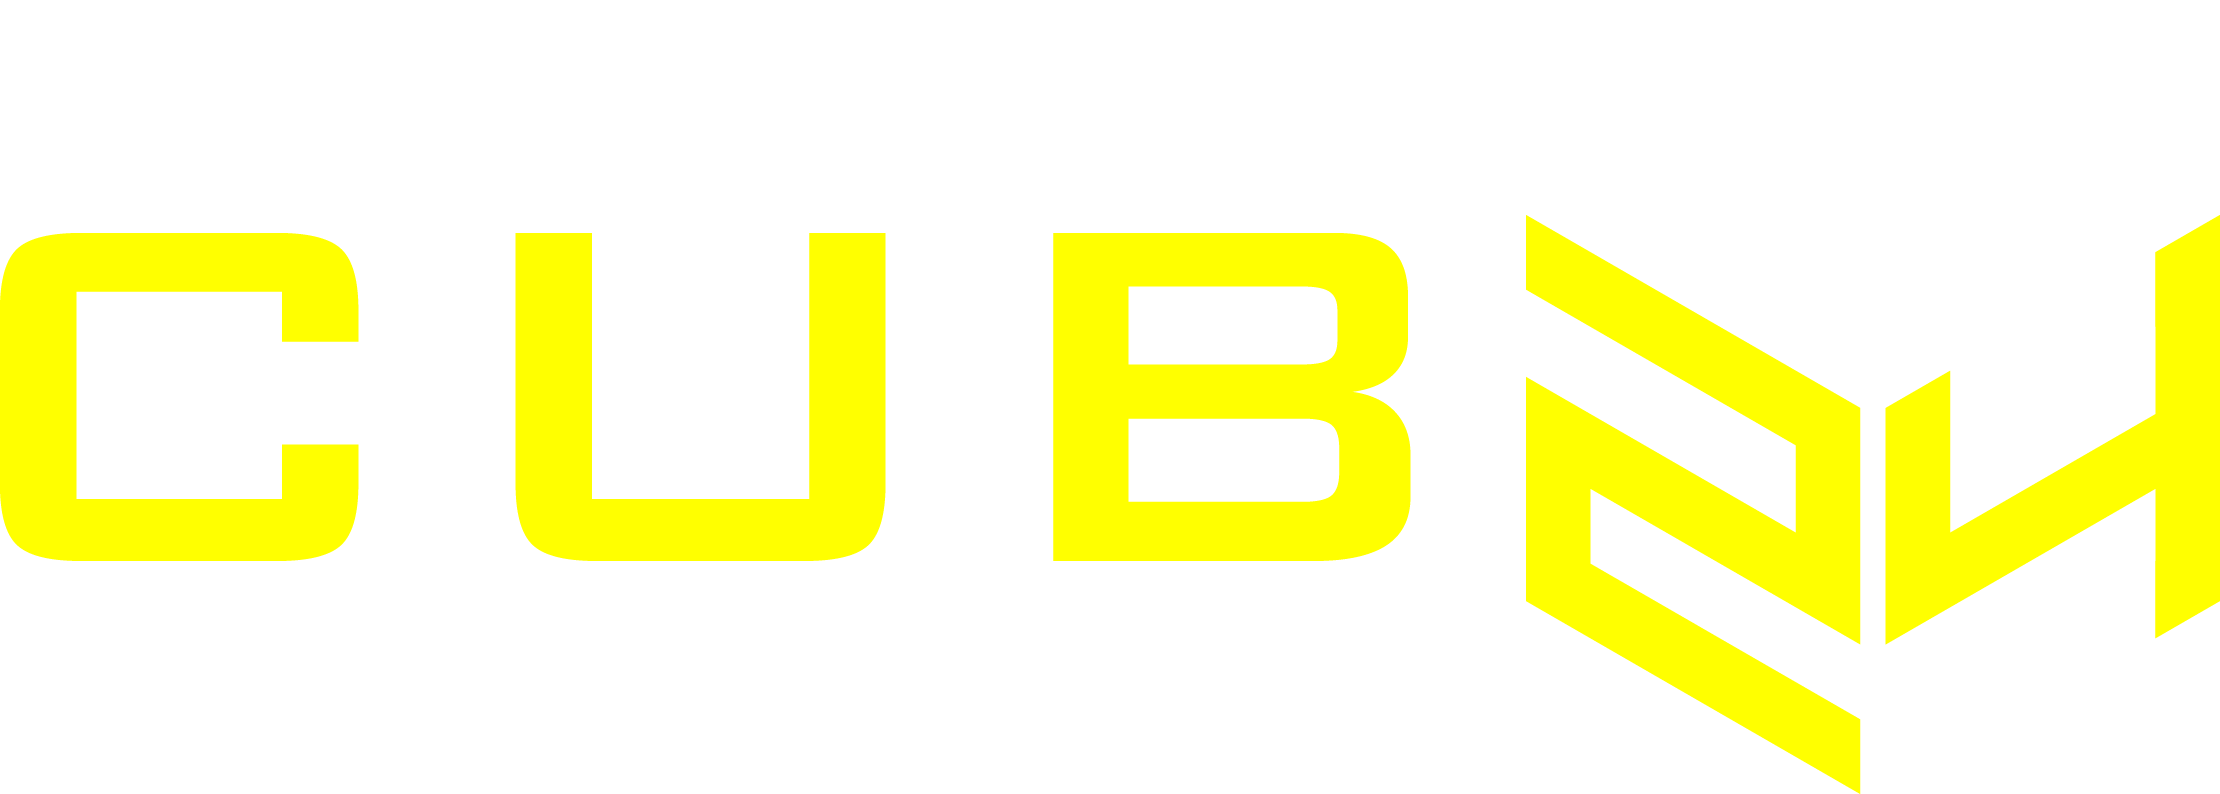 Logo final CUB24 (slogan) jaune et blanc sur fond vert